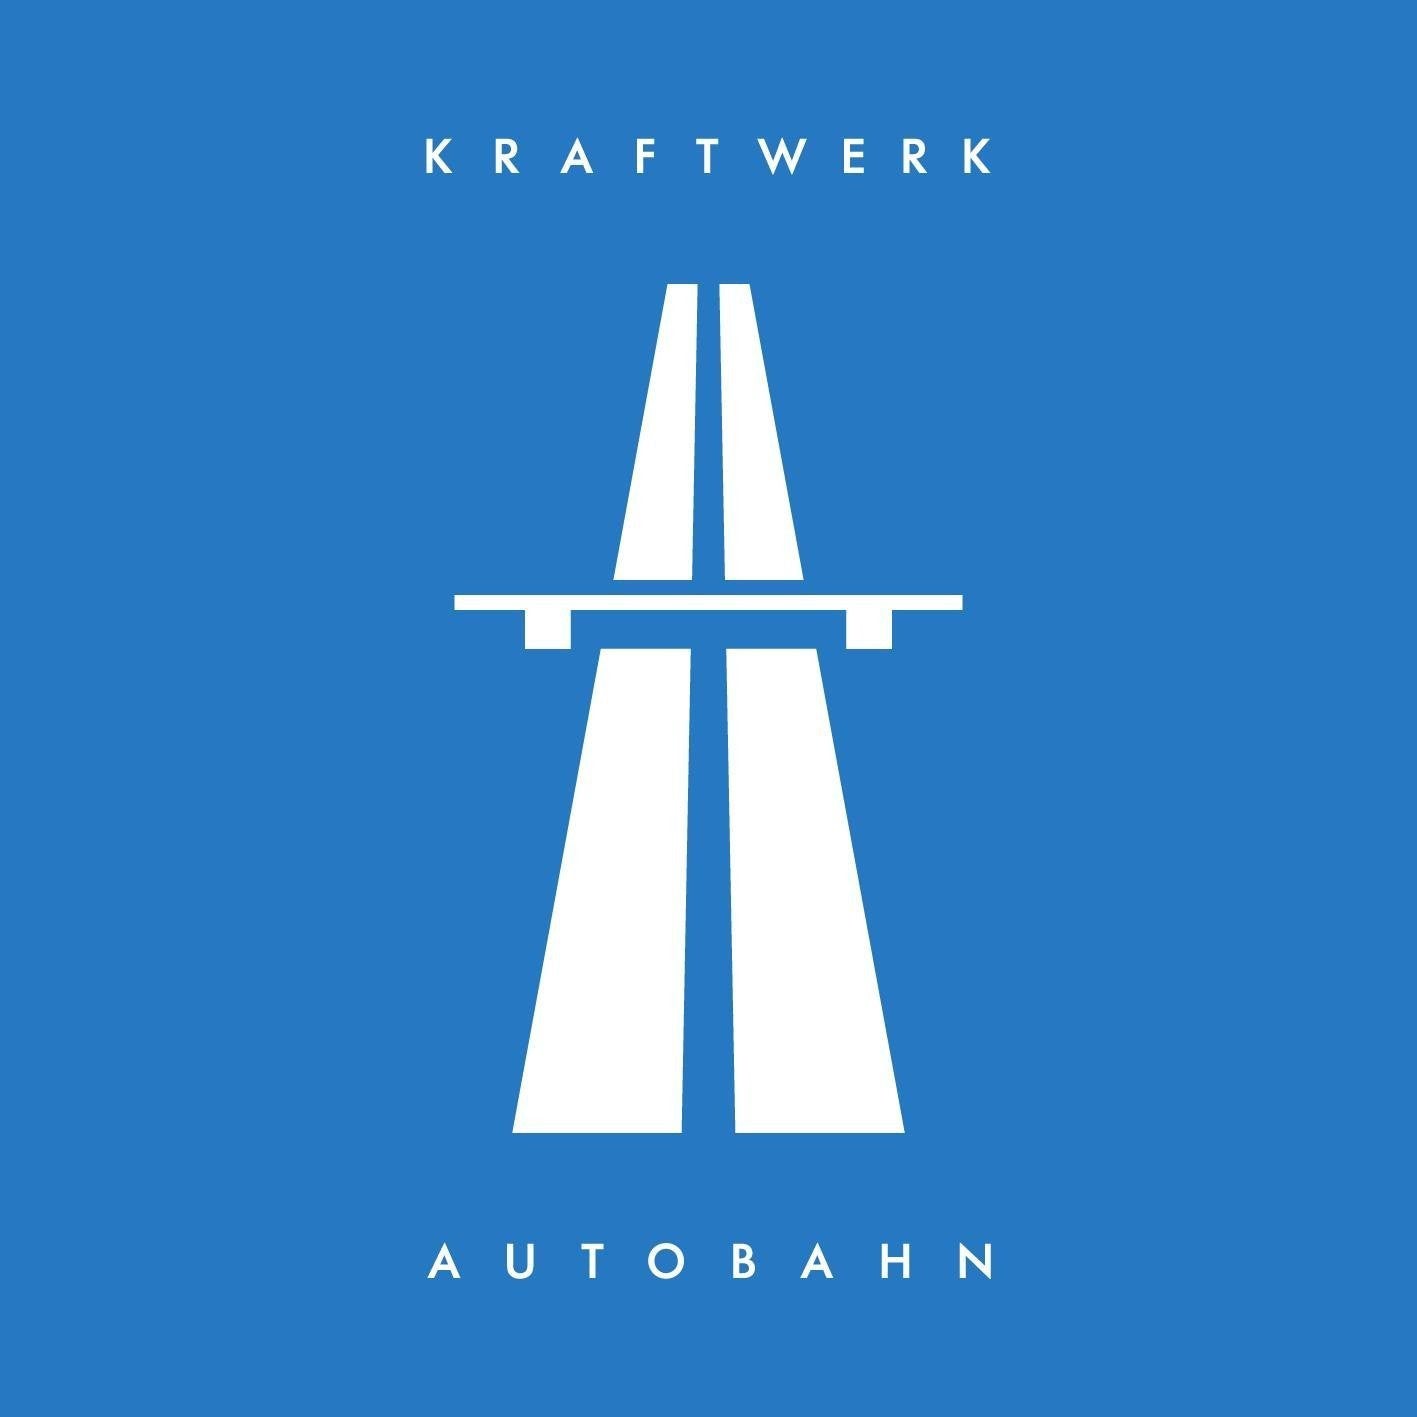 Kraftwerk - Autobahn (1974) - New LP Record 2009 Parlophone Kling Klang 180 gram Vinyl & Book - Electronic / Krautrock / Synth-pop